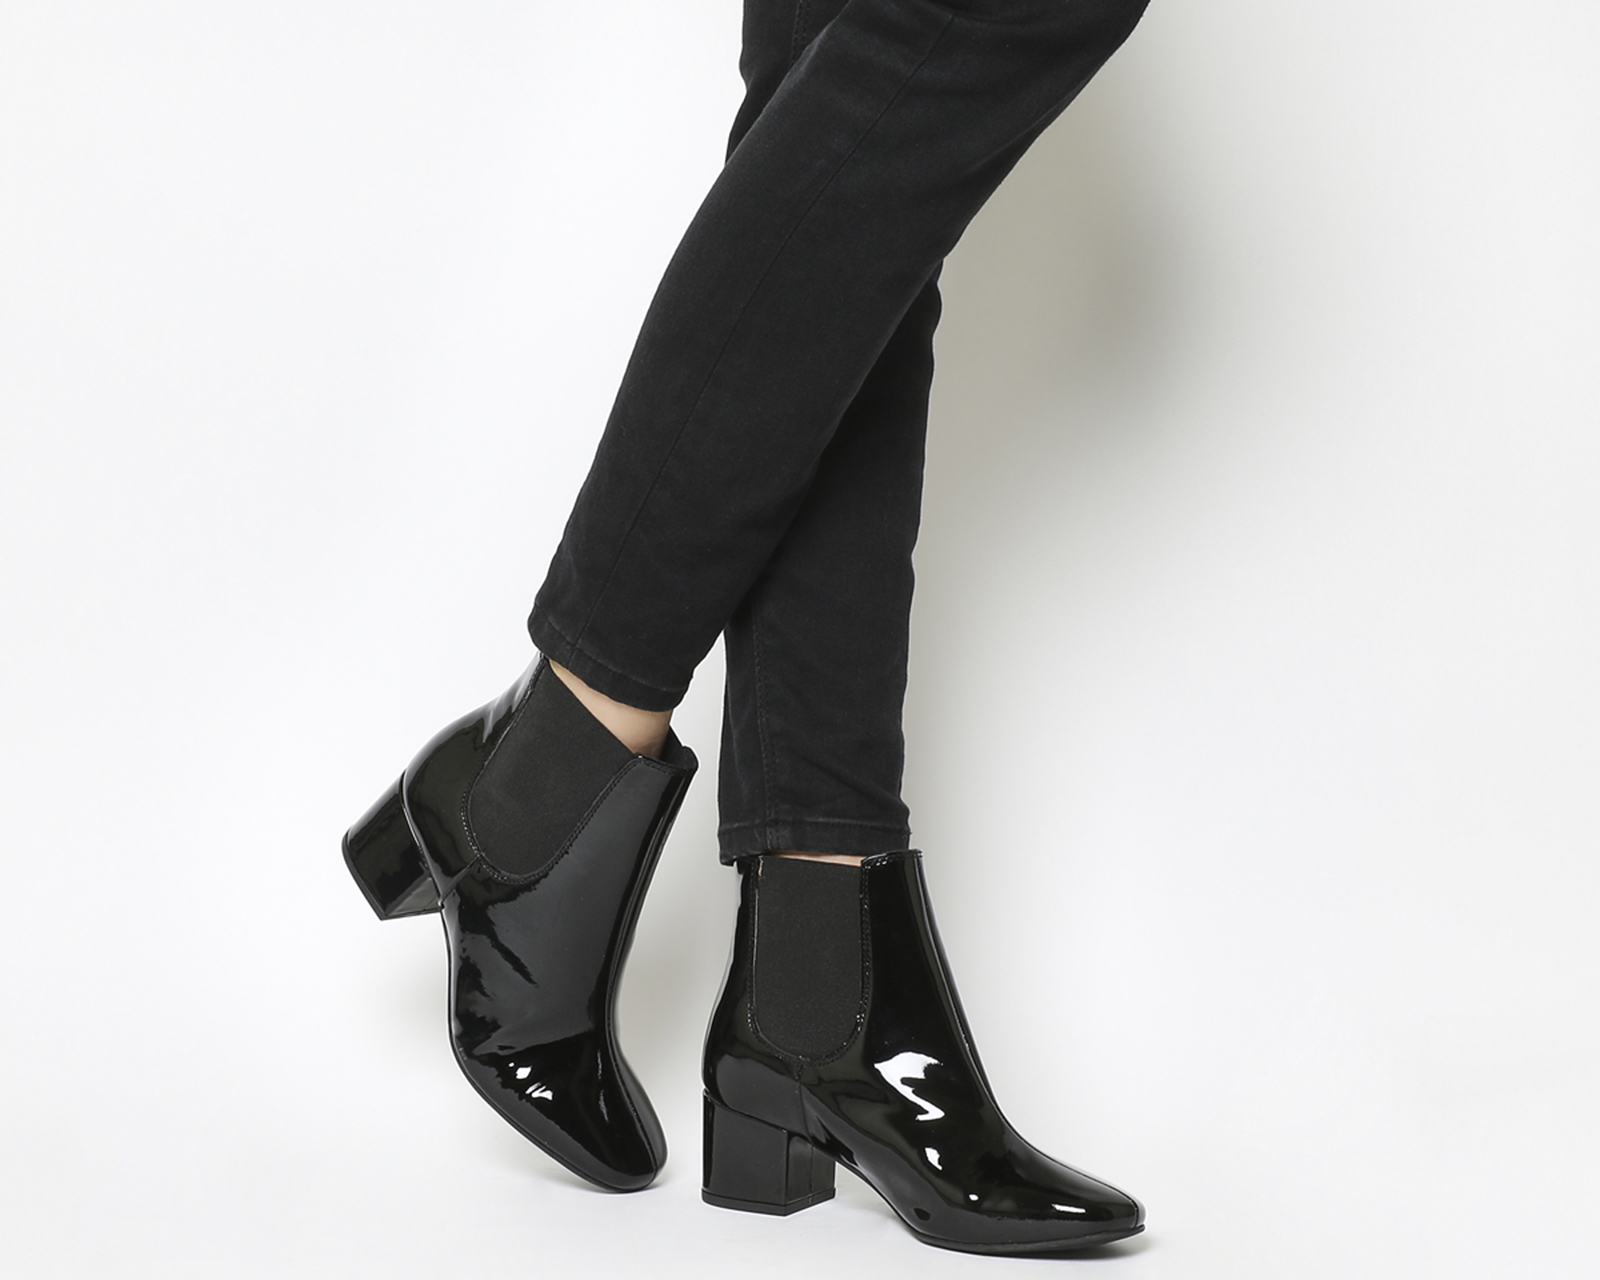 OFFICELove Bug Block Heel Chelsea BootsBlack Patent Leather